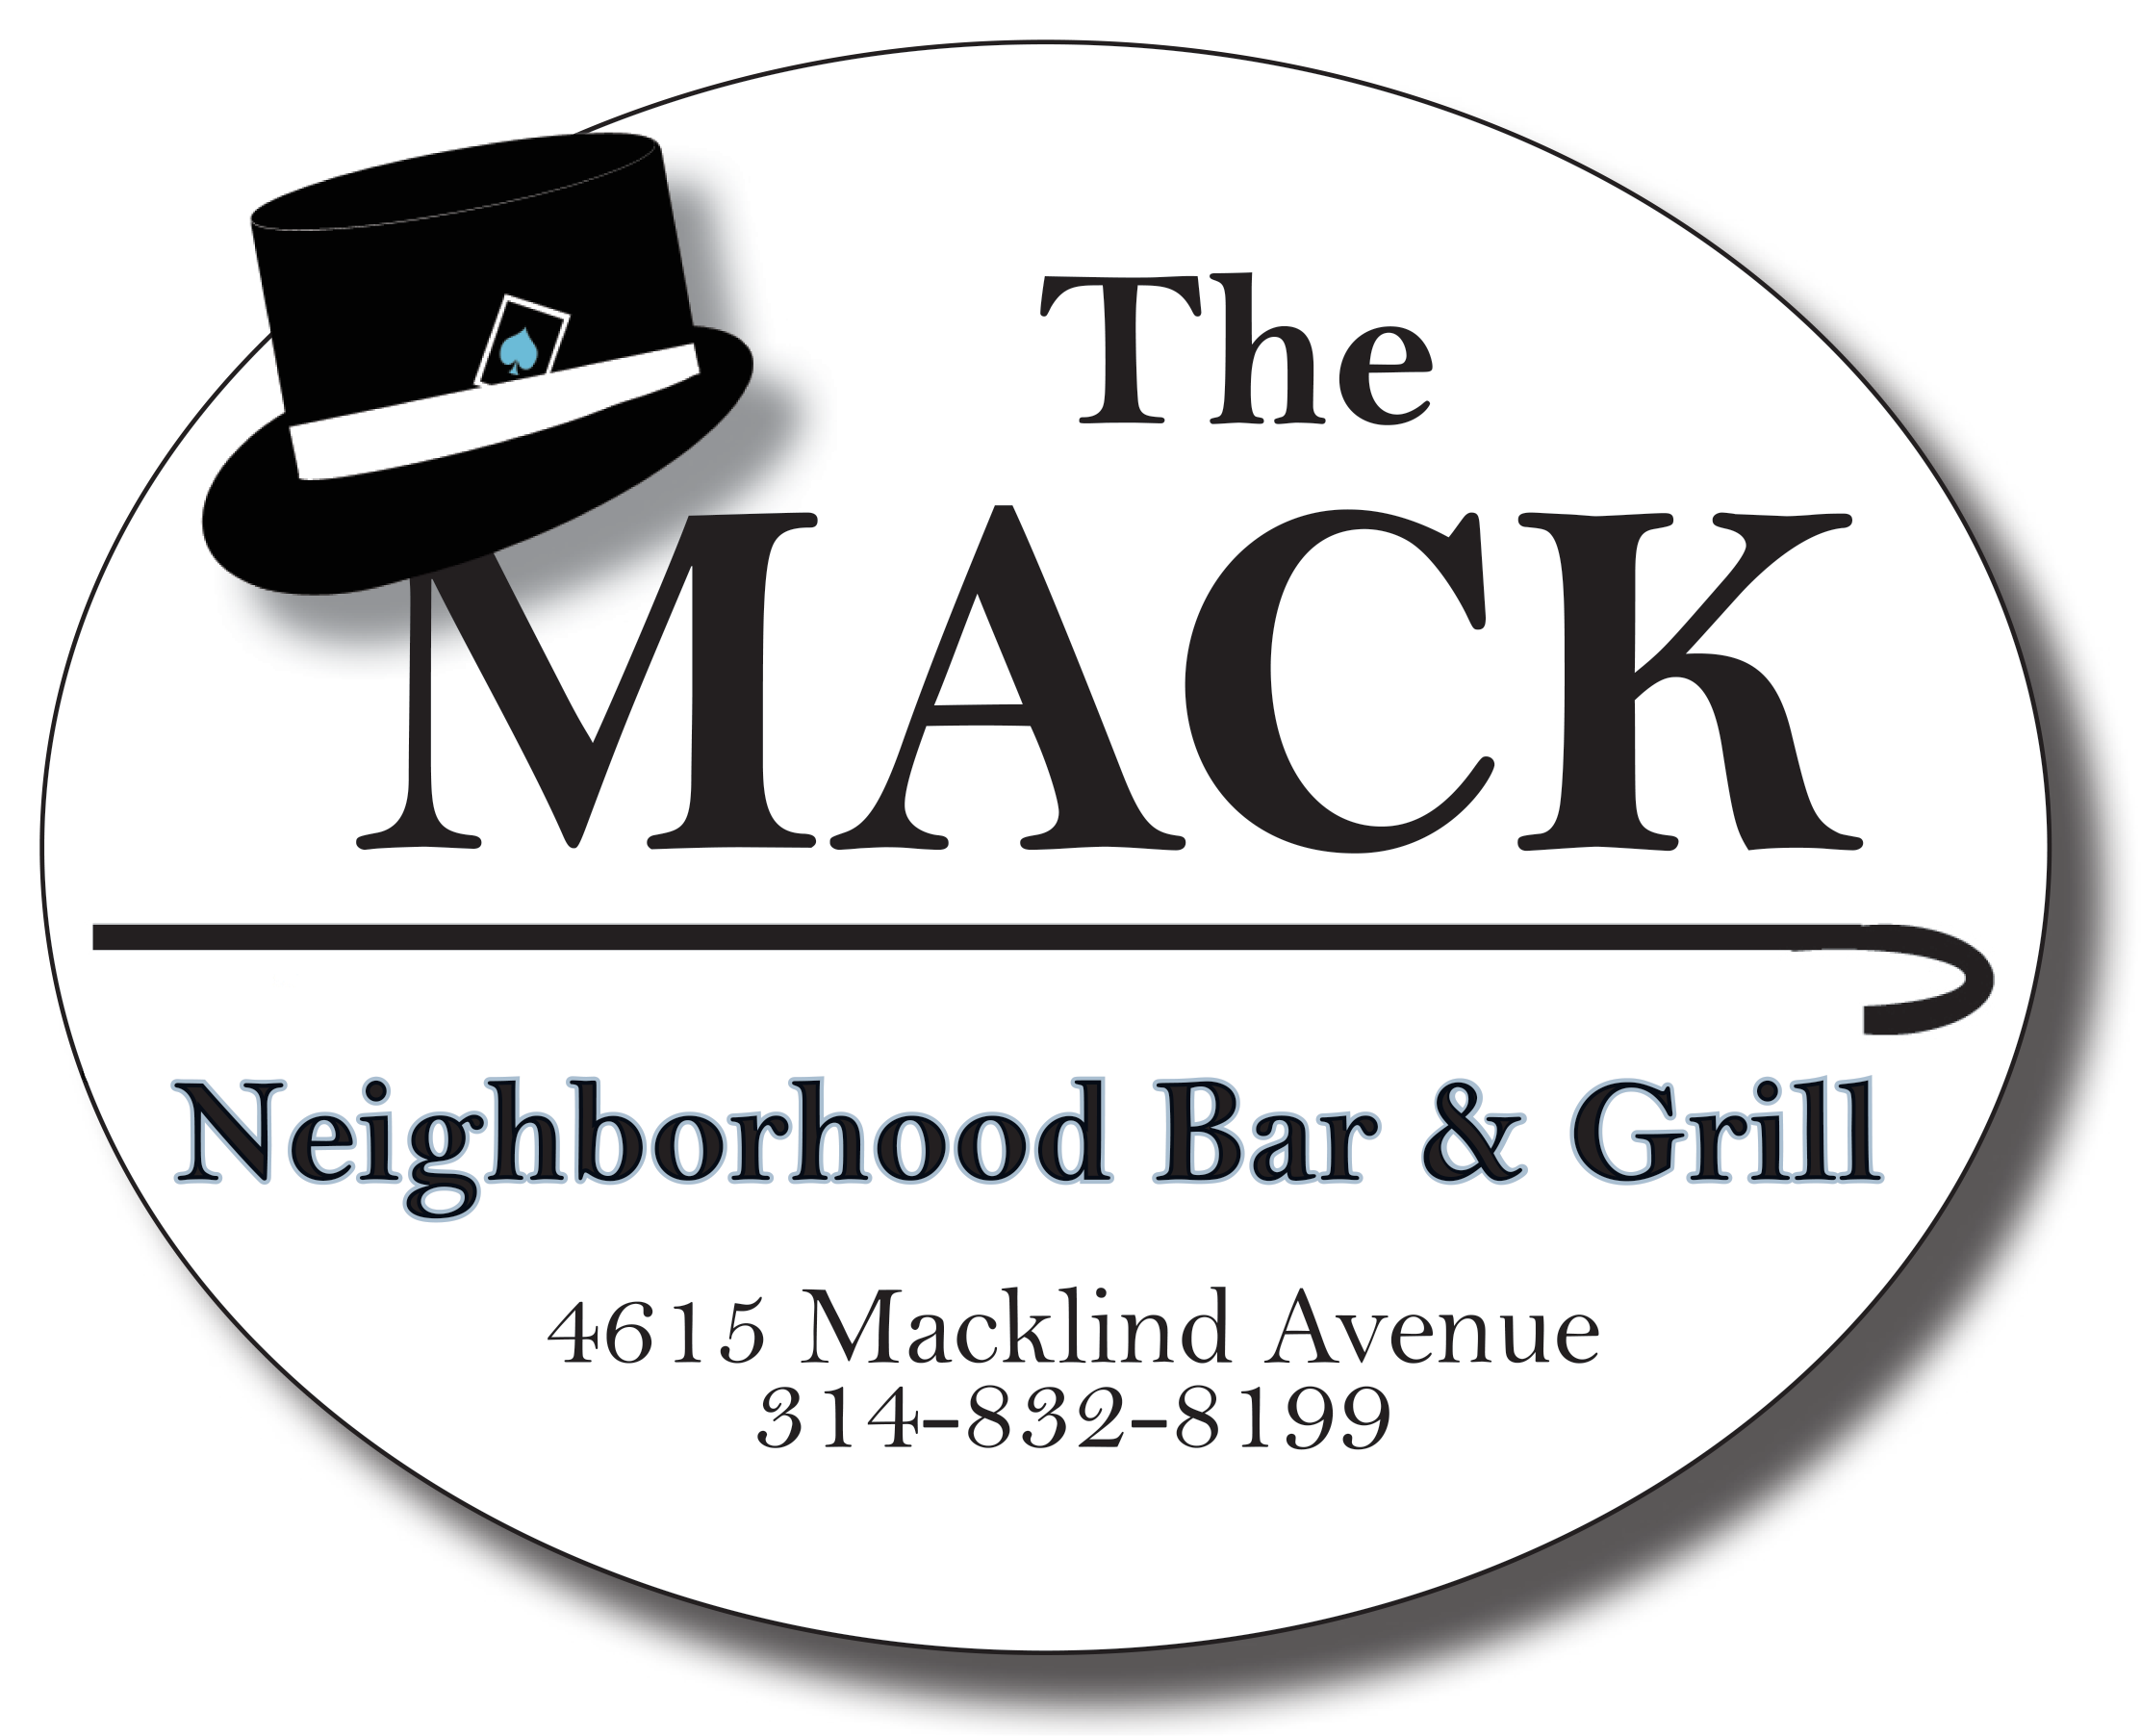 The Mack Bar & Grill